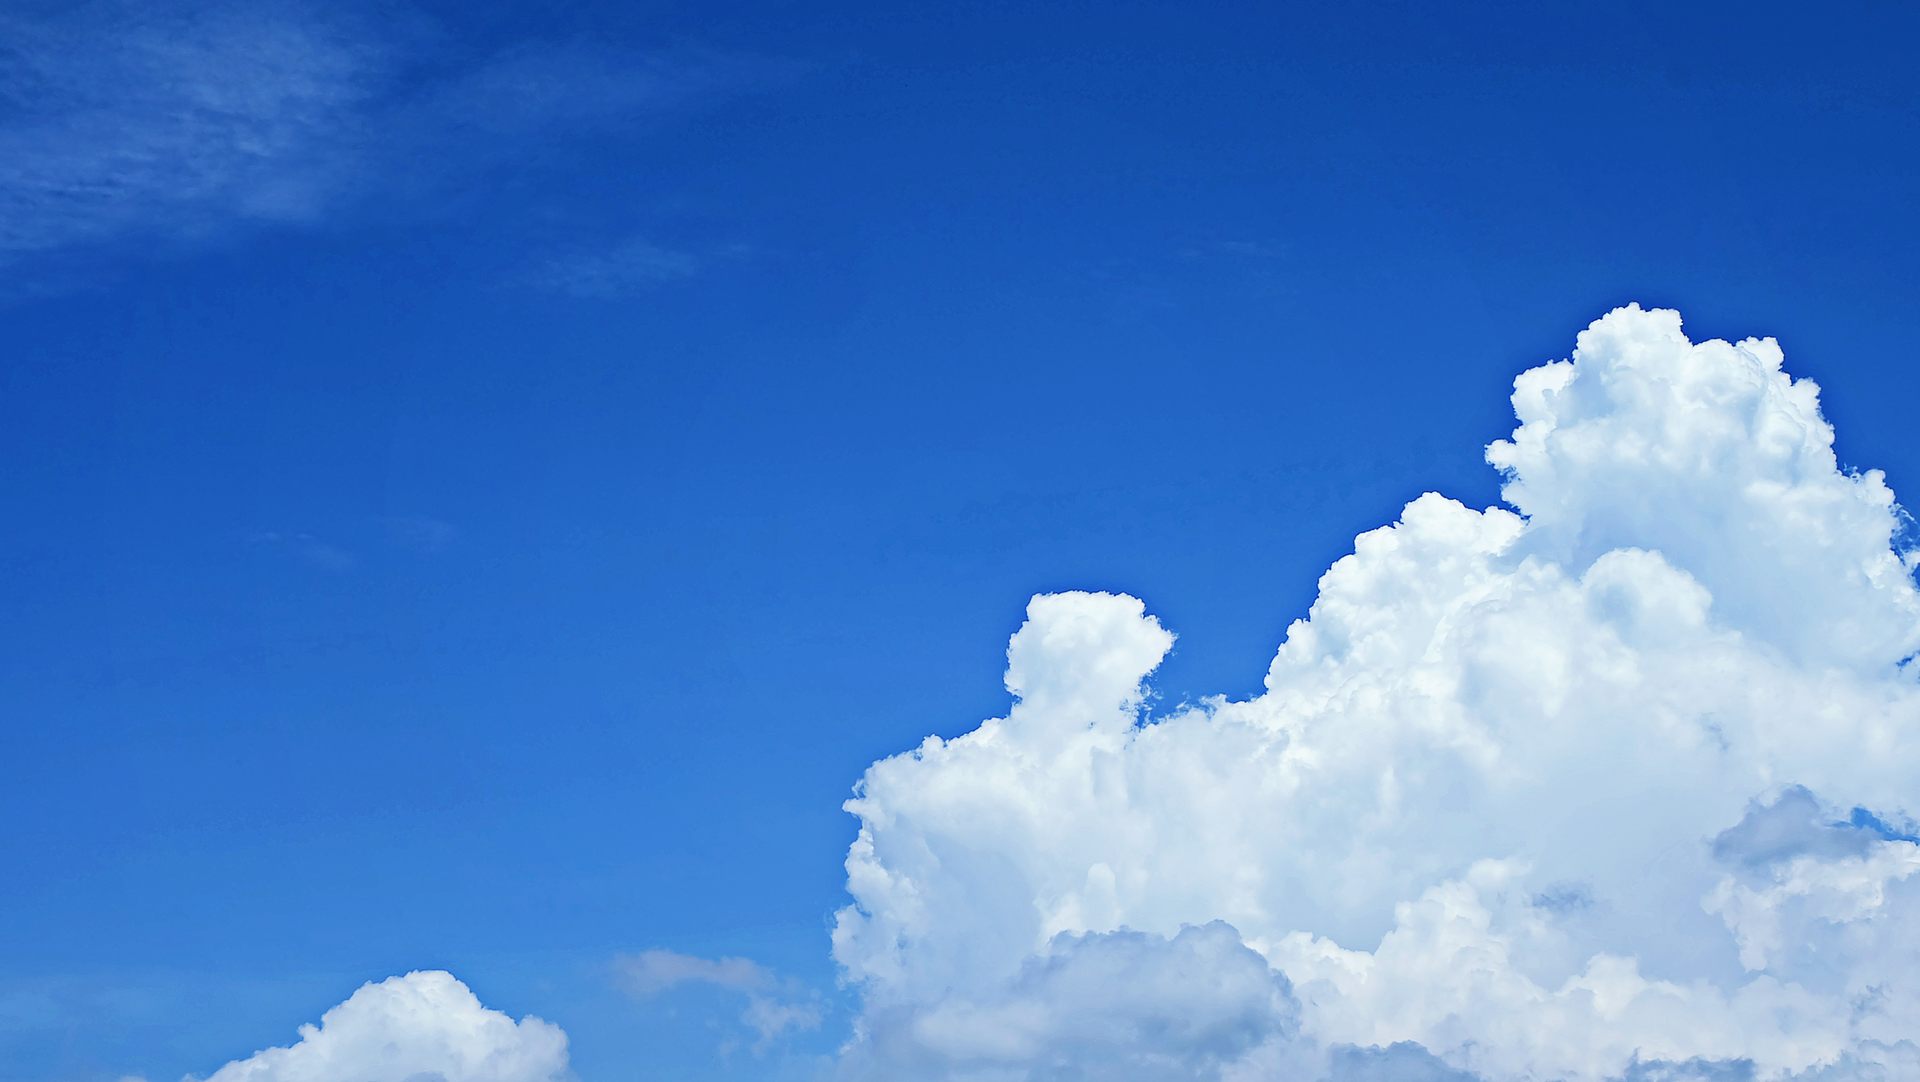 beautiful blue wallpaper,sky,cloud,daytime,blue,cumulus